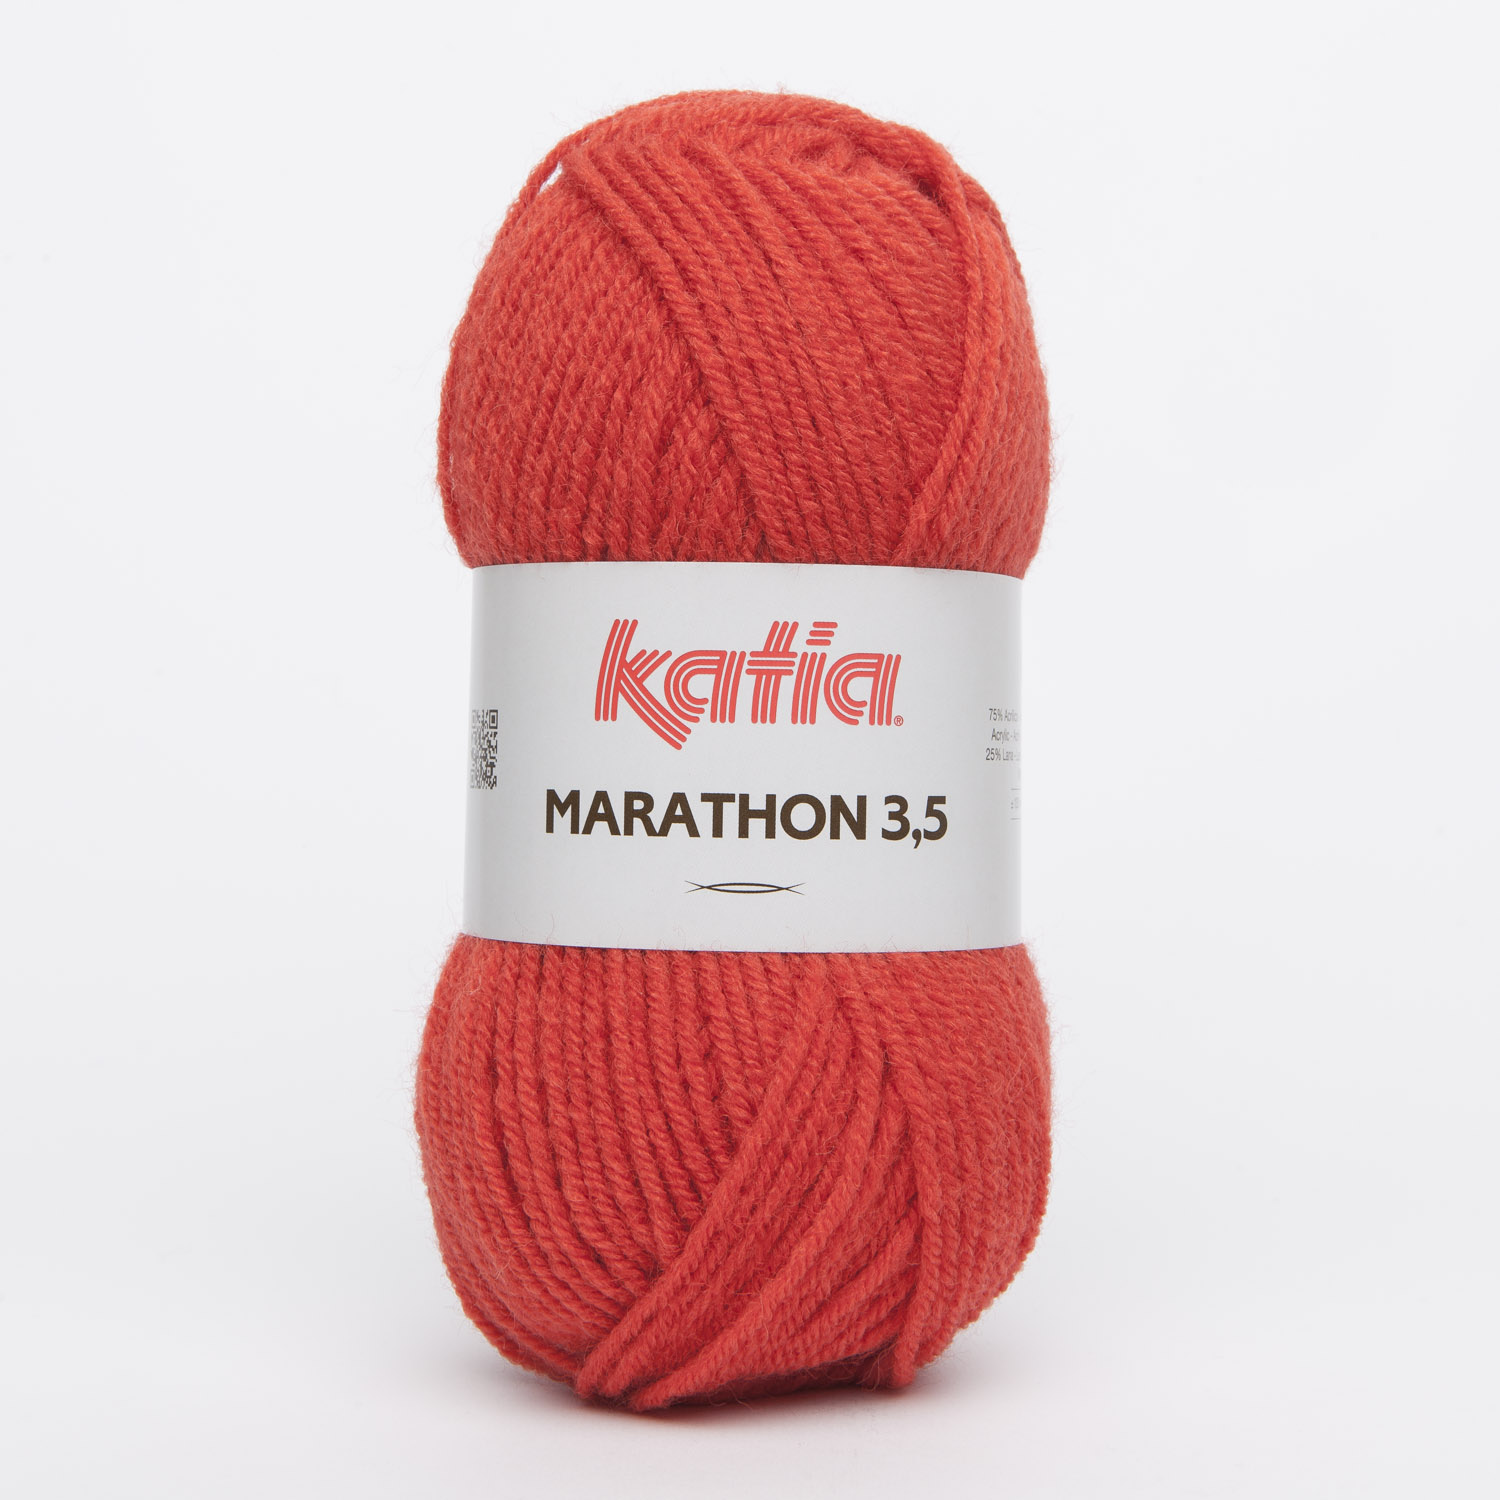 Katia Marathon 3.5 no 20